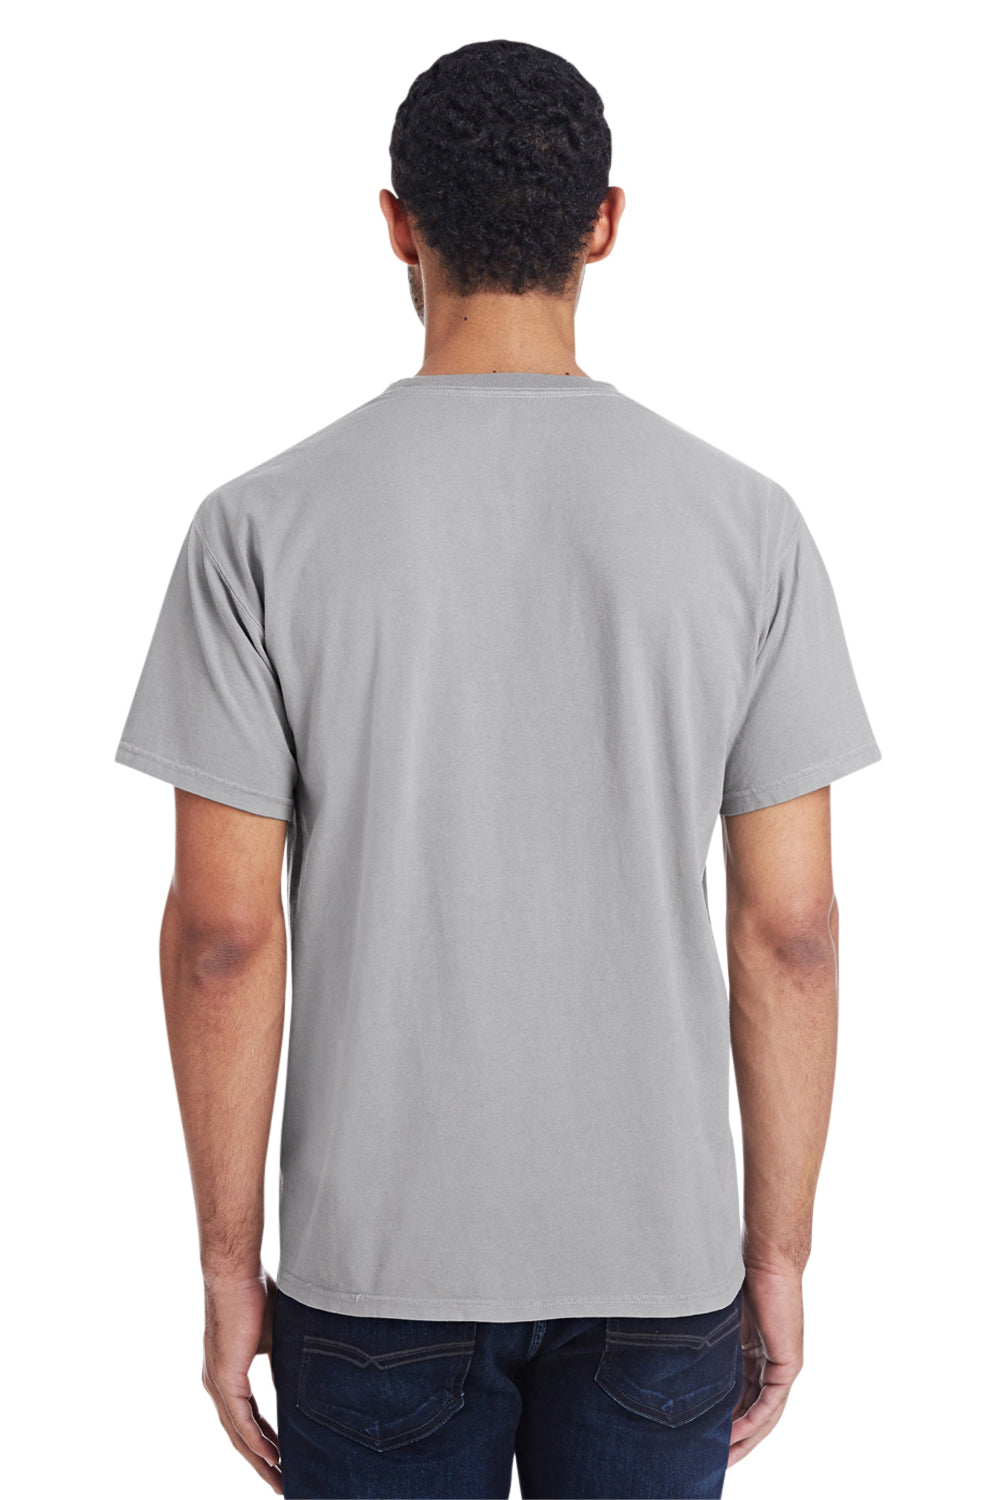 ComfortWash By Hanes GDH150 Mens Short Sleeve Crewneck T-Shirt w/ Pocket Concrete Grey Back